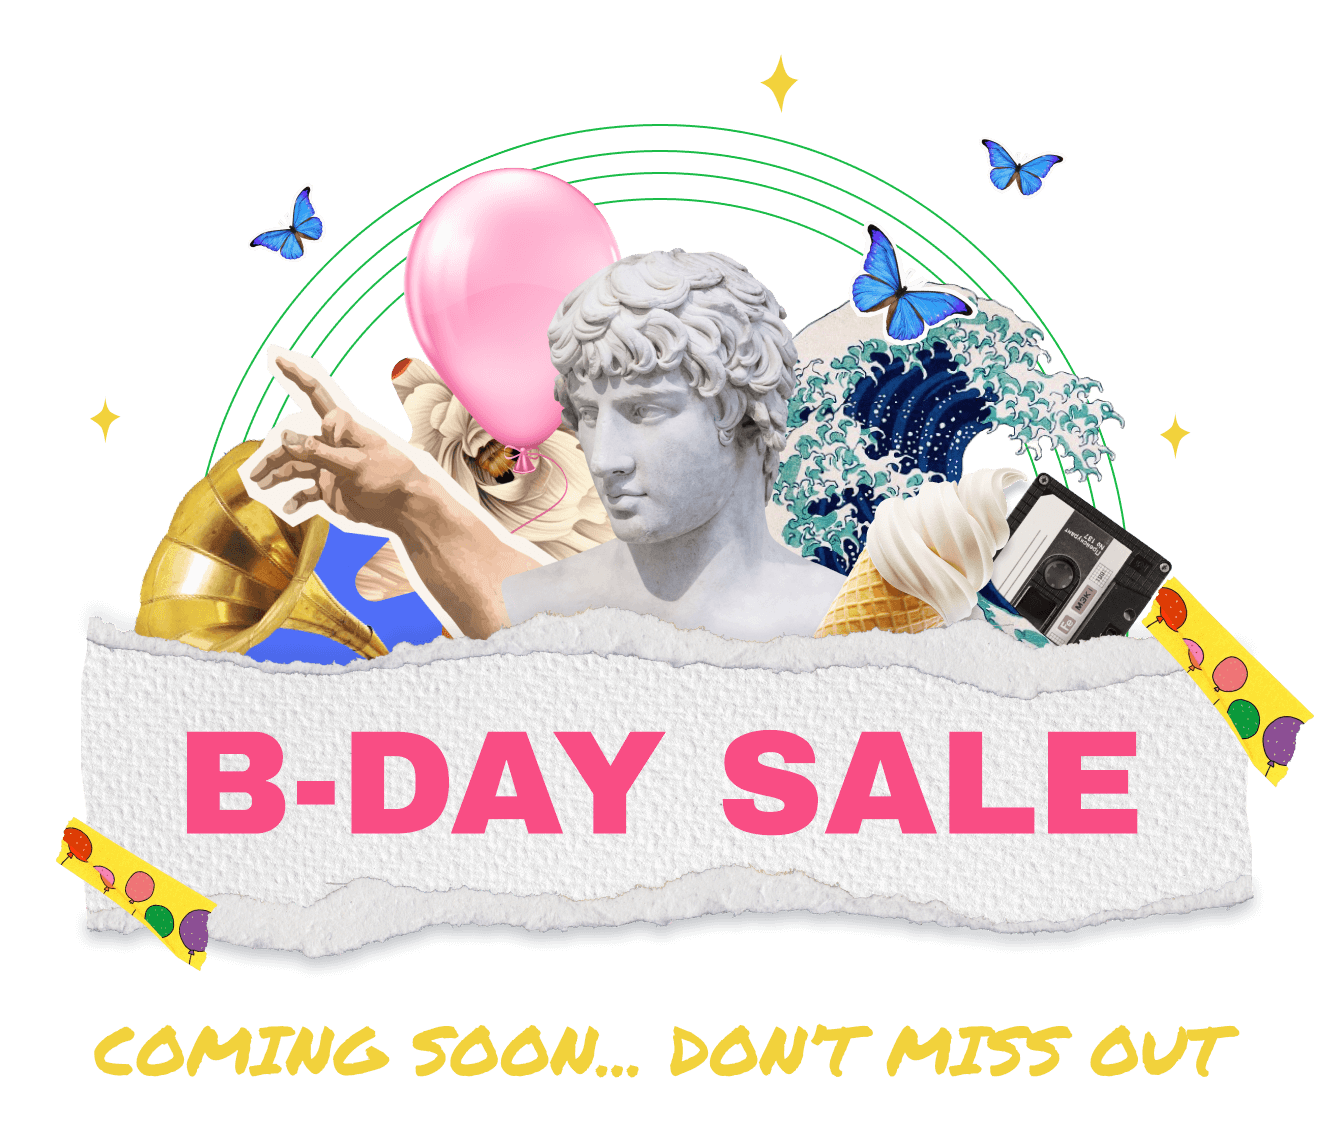 crocoblock discounts on birthday sale